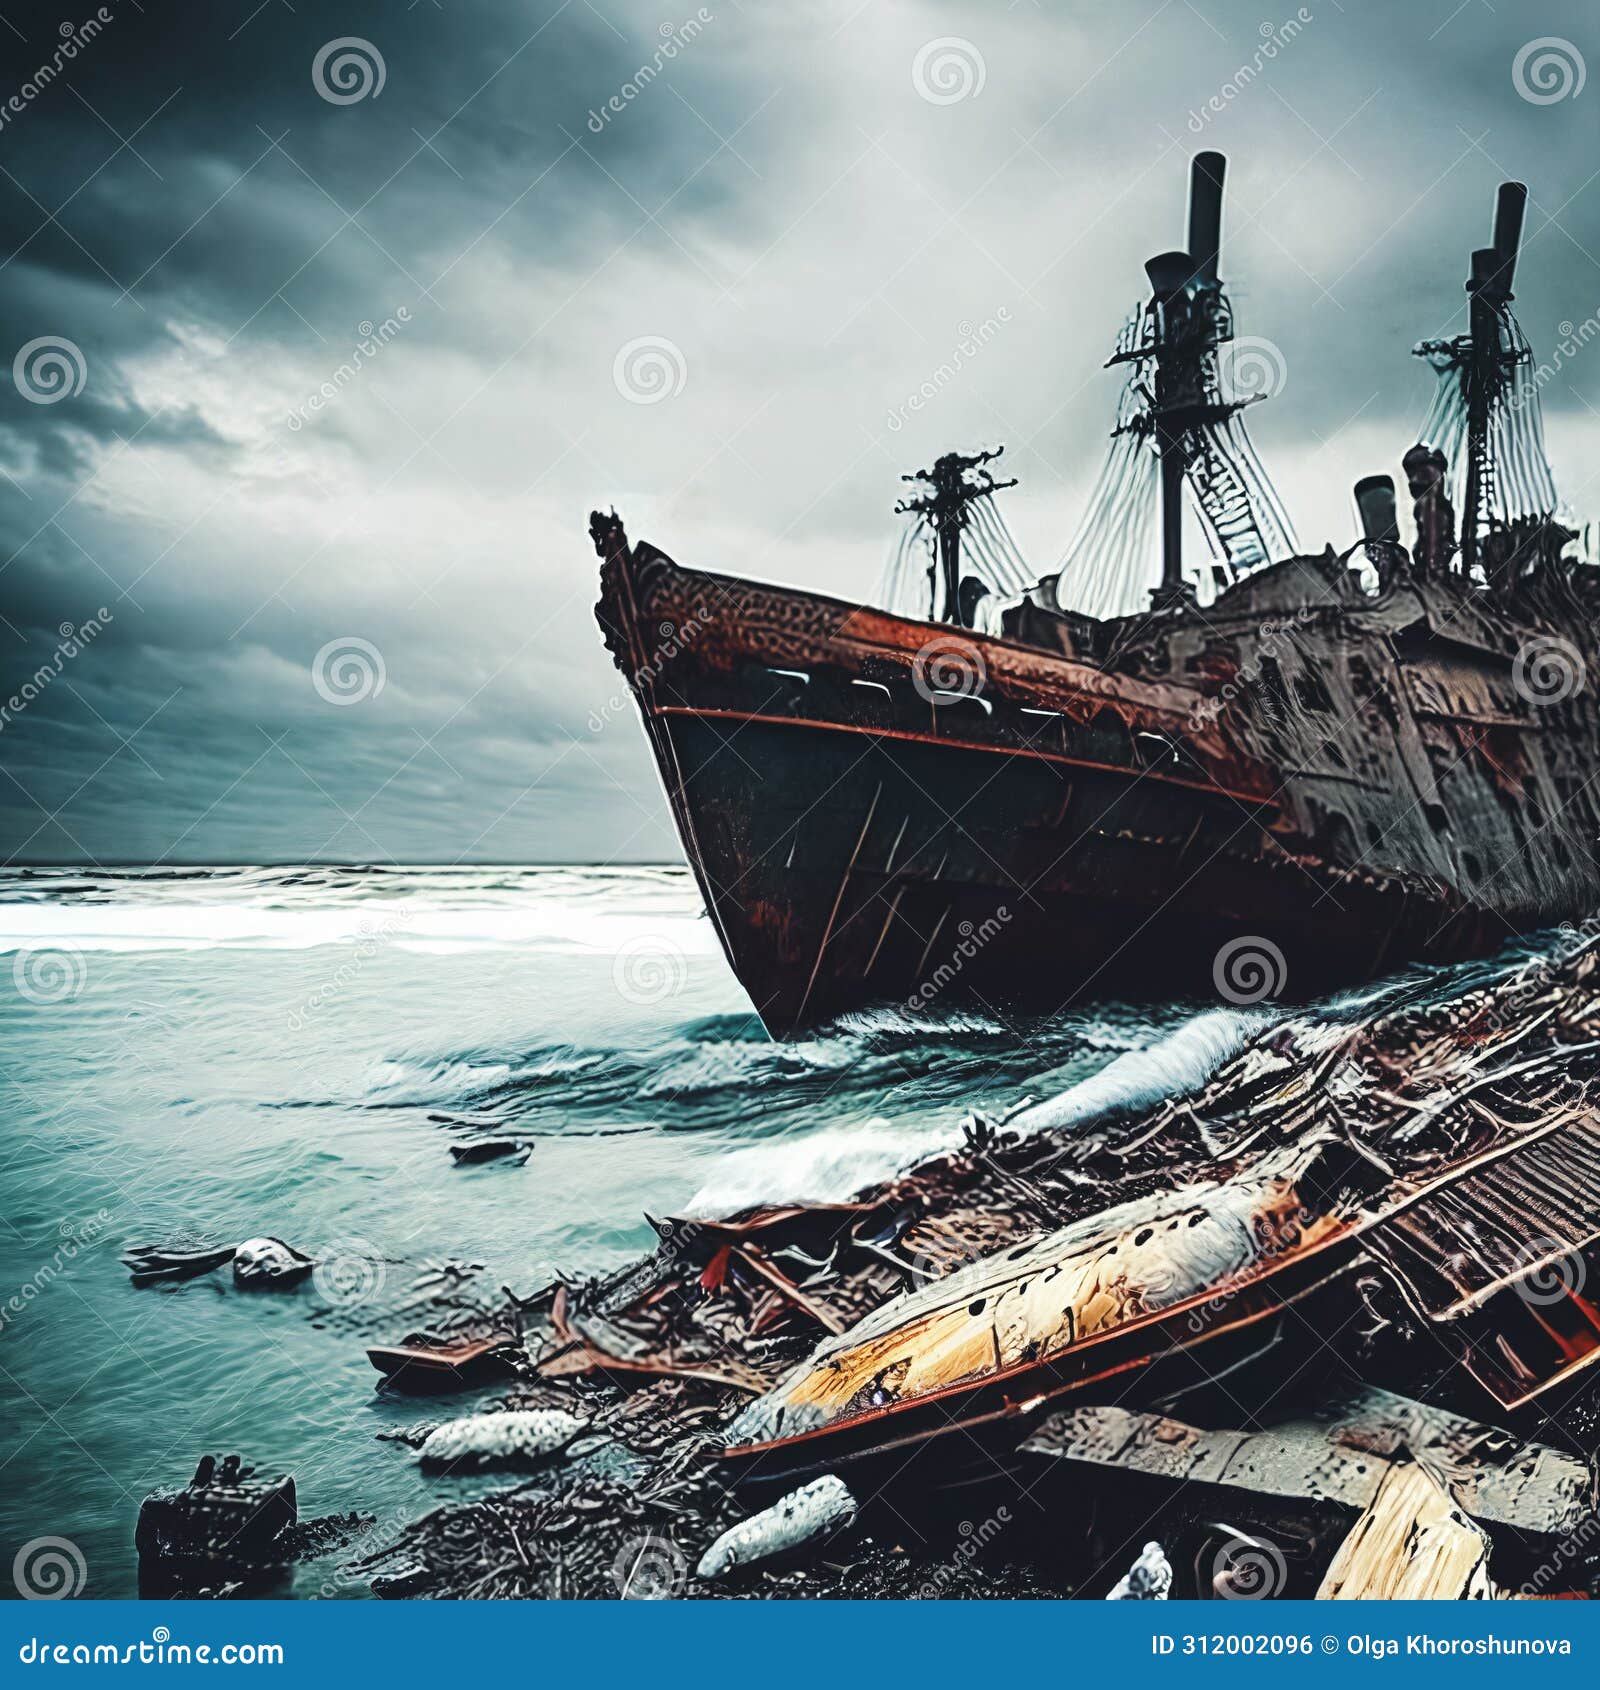 shipwrecked world. post-apocalyptic coastal scene with sunken ships, washed-up debris